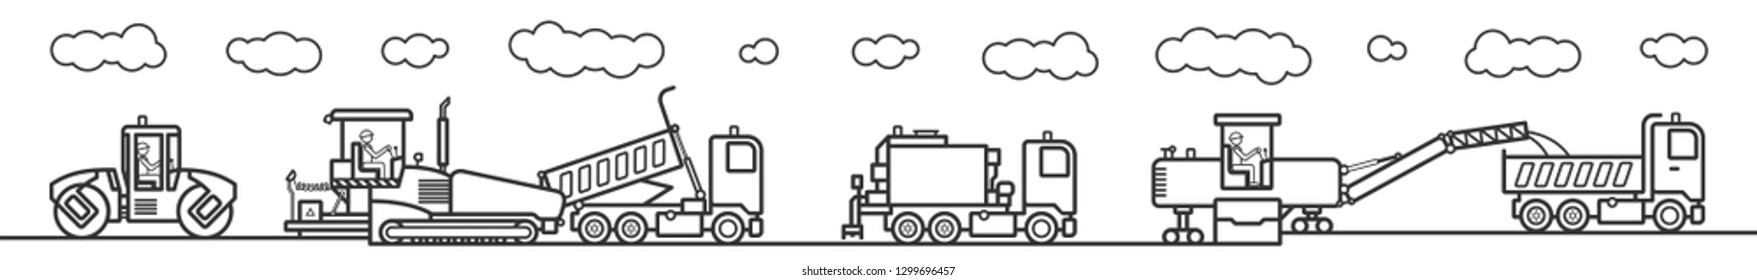 Road construction illustration